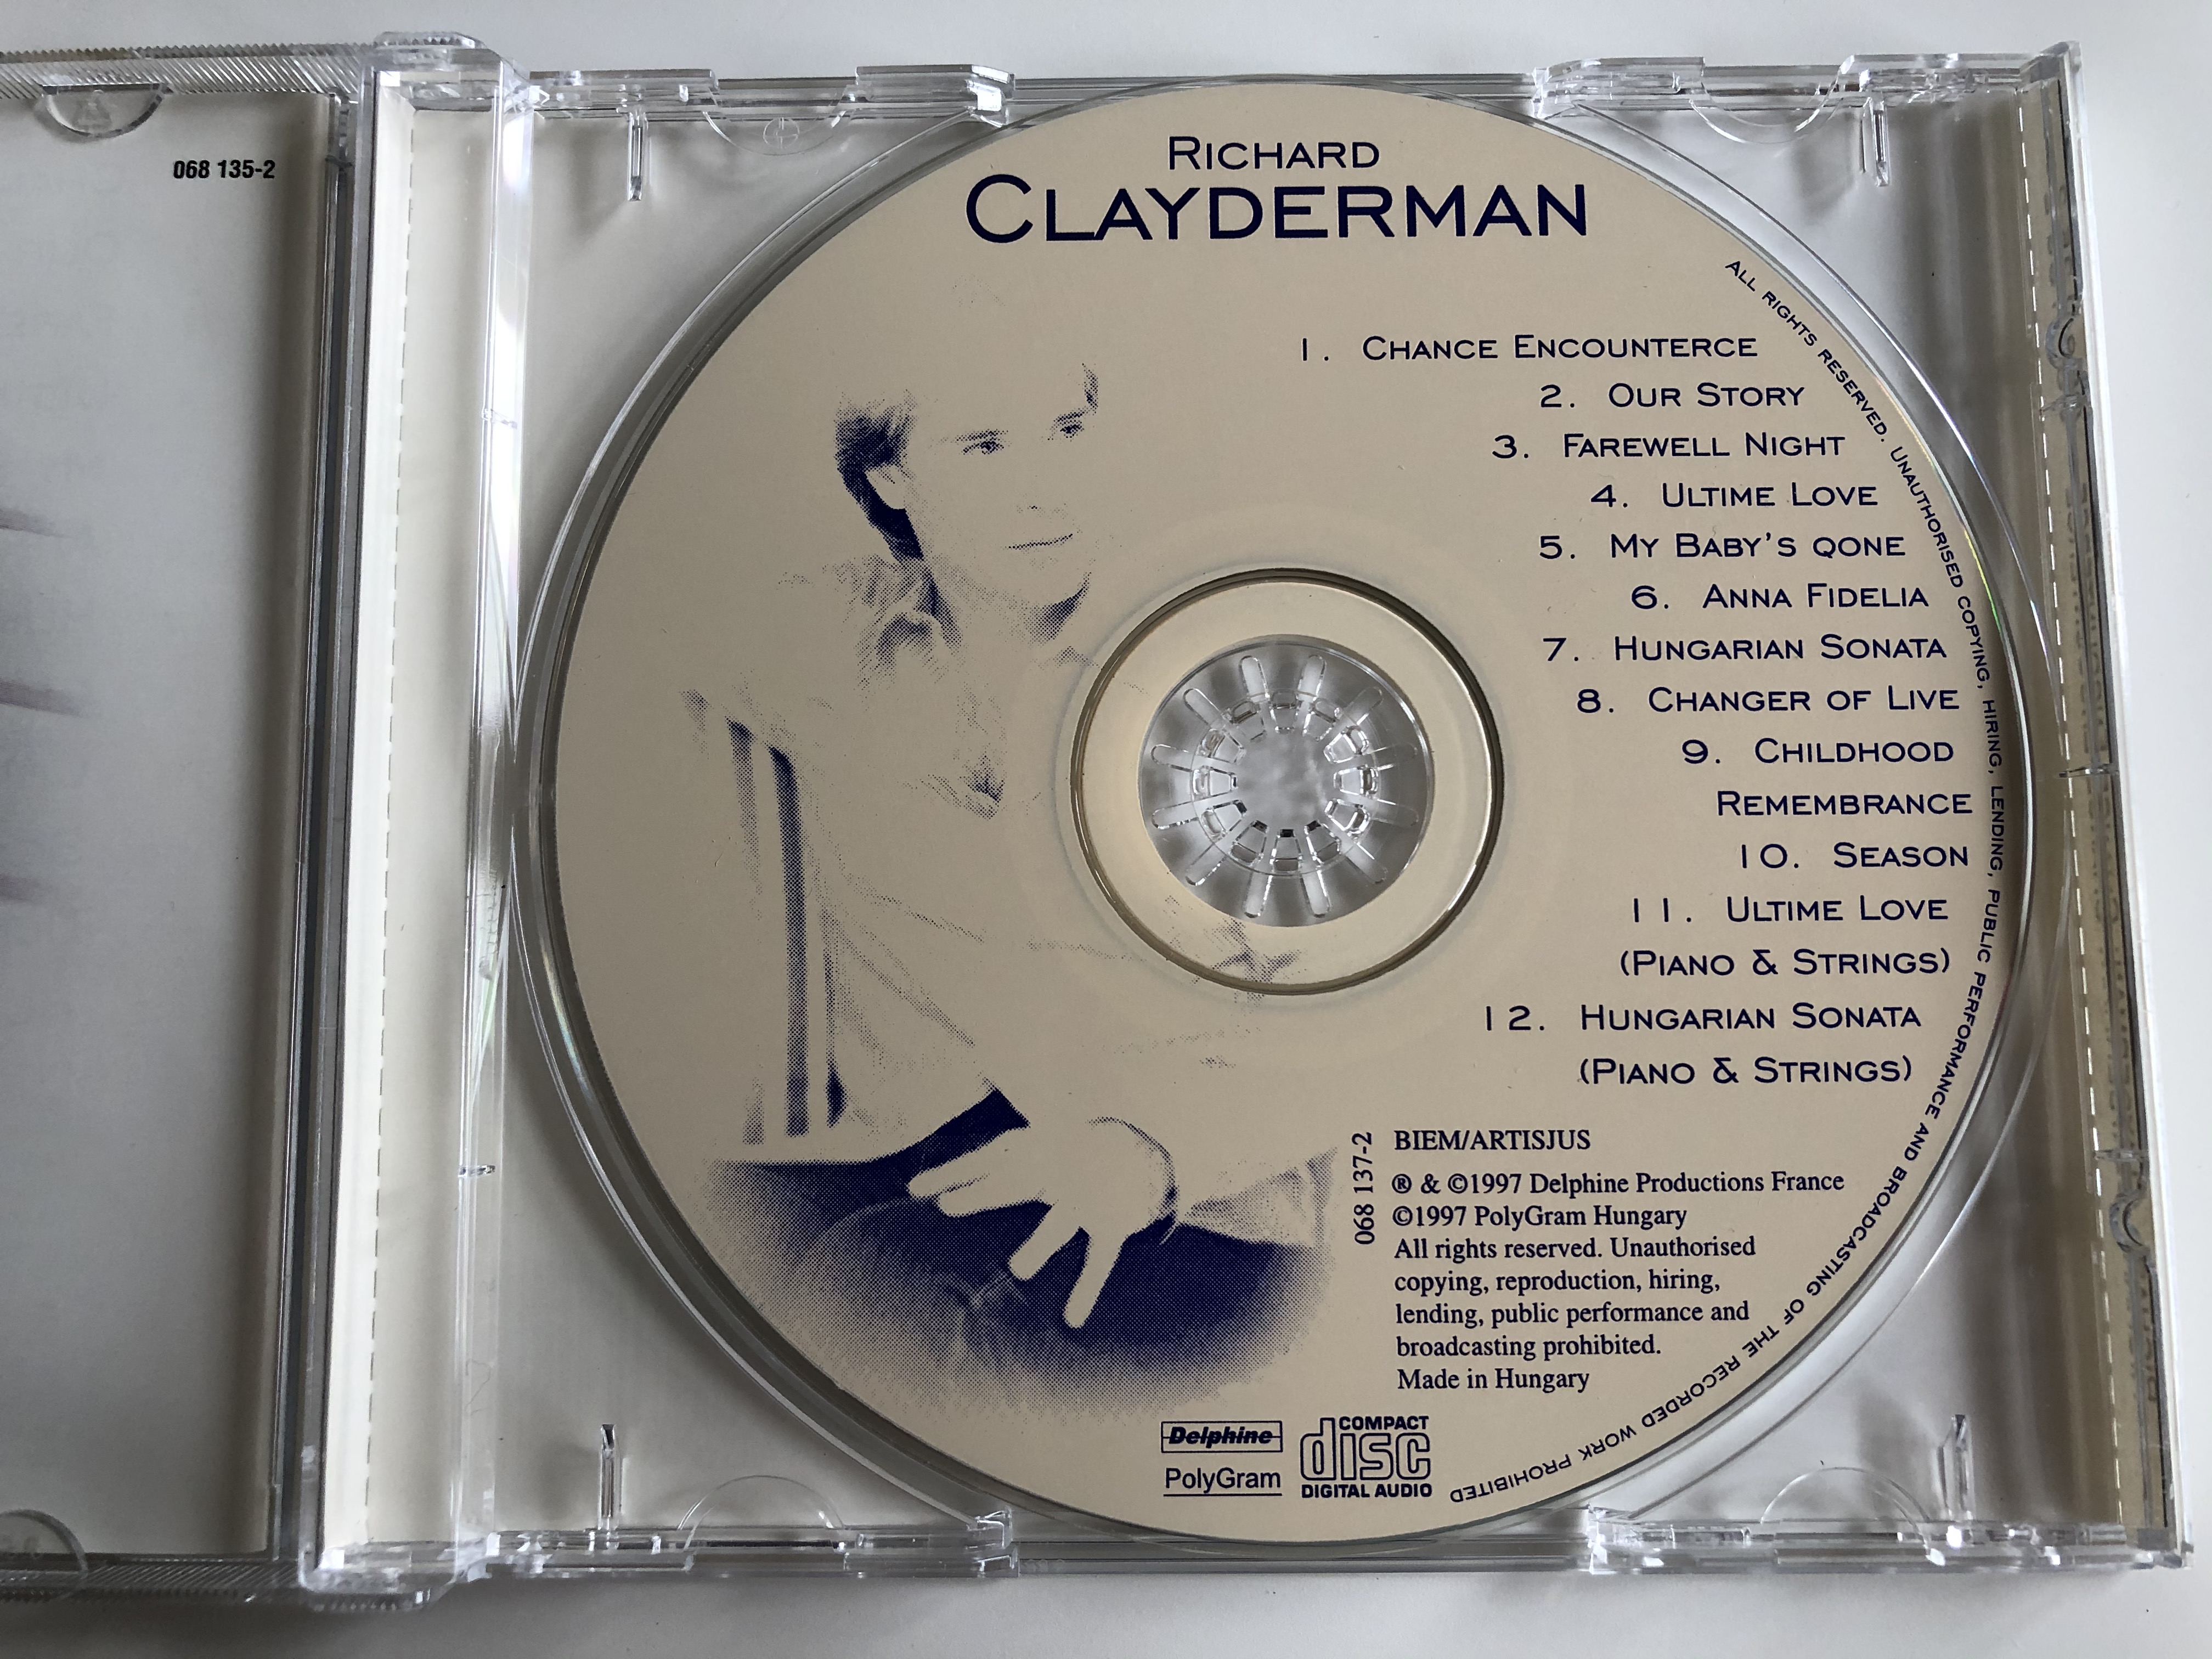 richard-clayderman-chance-encounterce-polygram-audio-cd-1997-068-135-2-3-.jpg